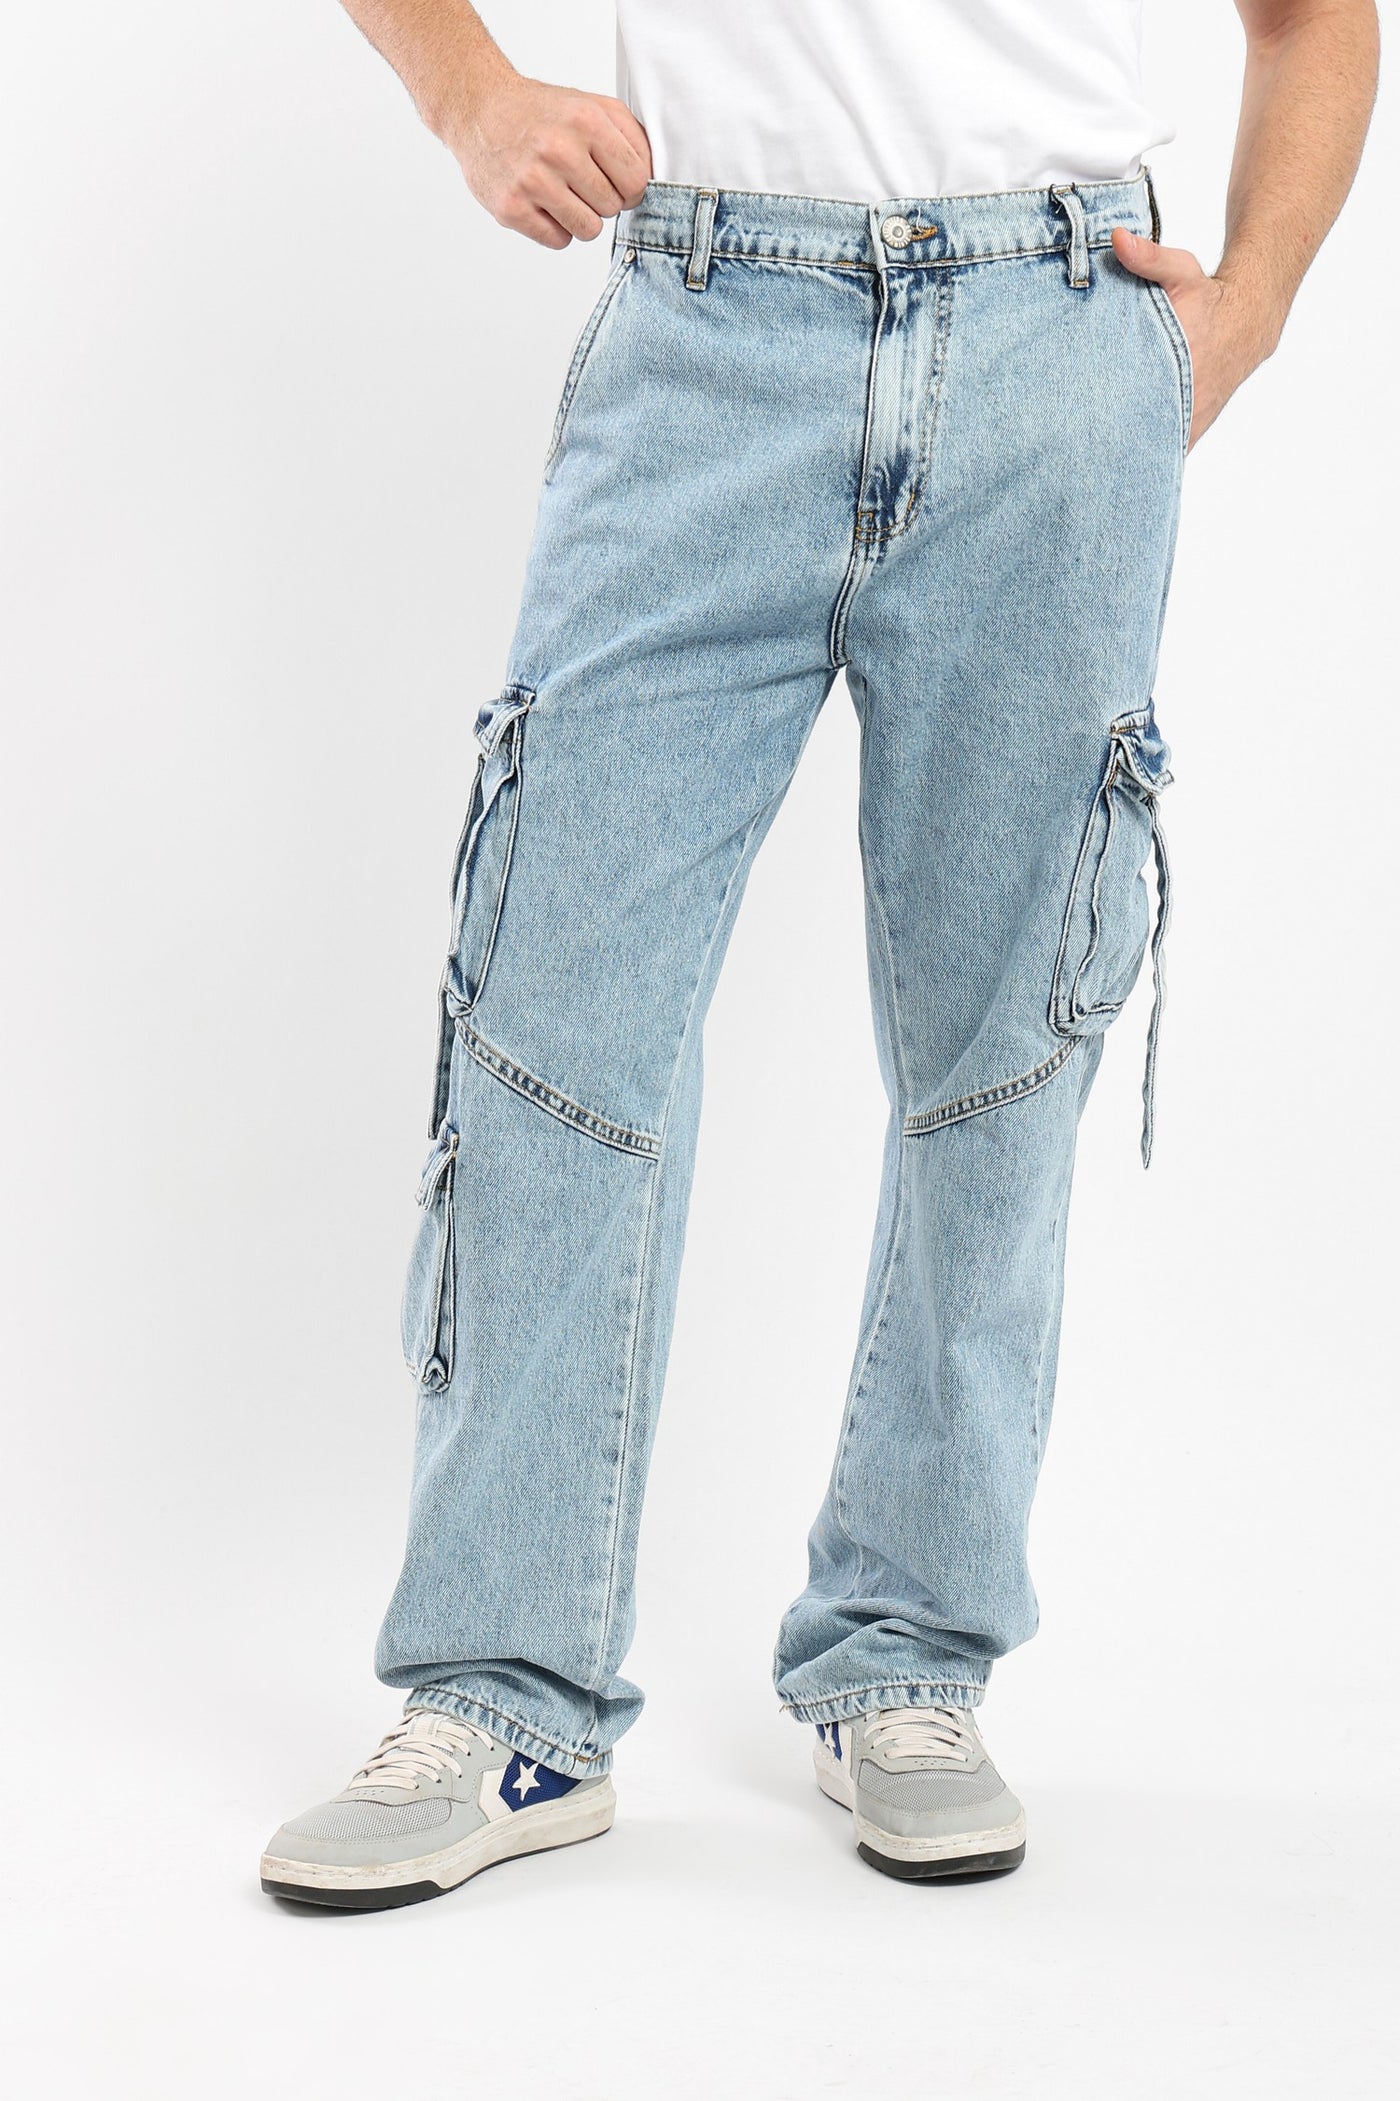 Jeans Cargo - Side Flap Pockets